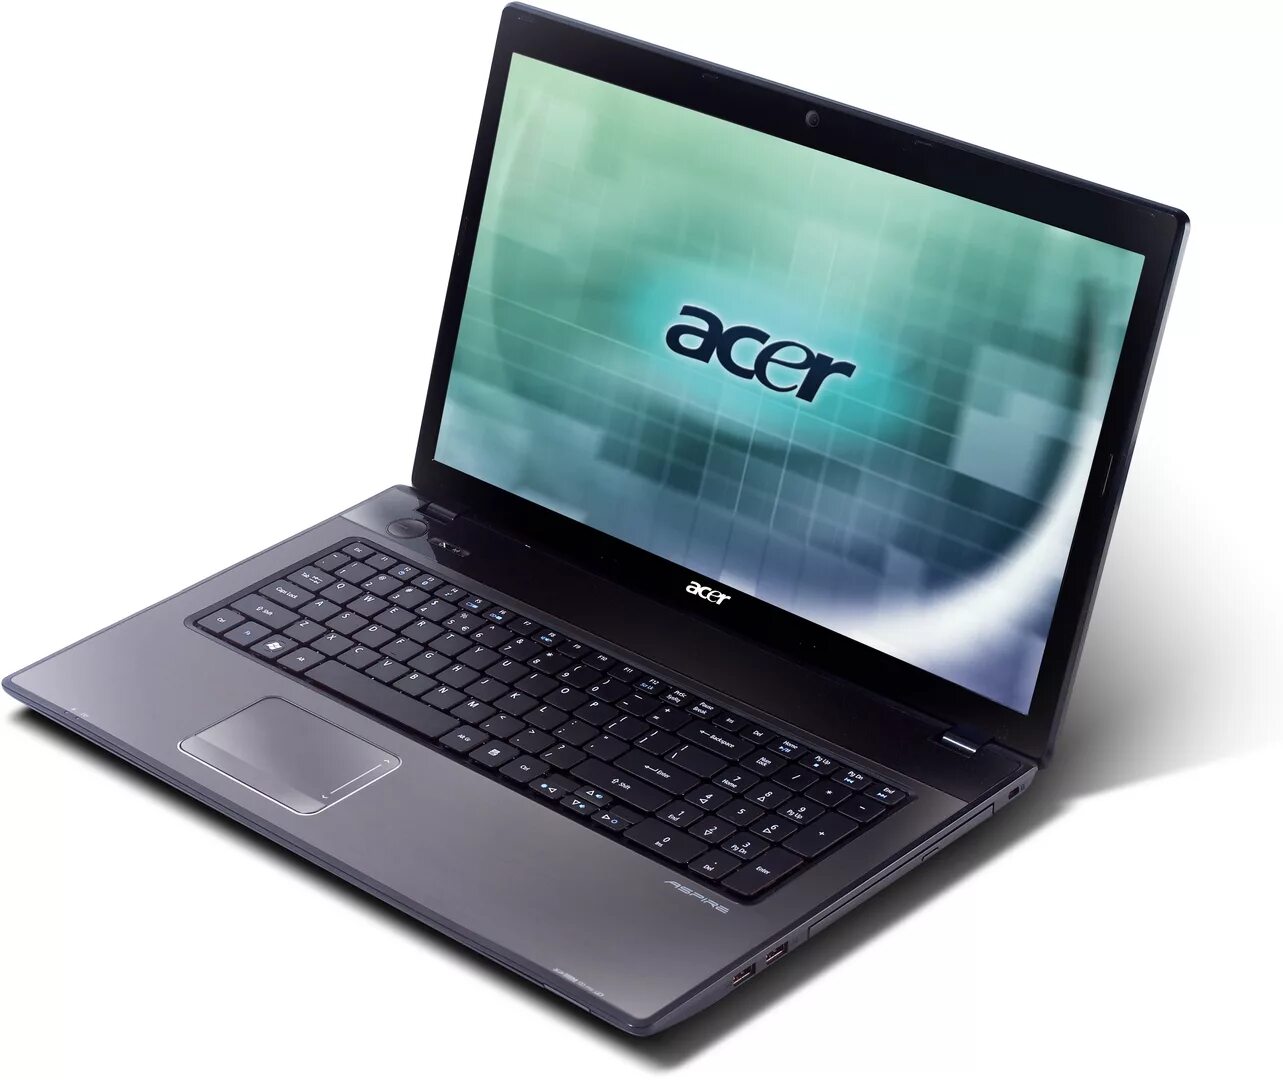 Acer Aspire 7741g. Ноутбук Acer Aspire 5750g. Acer Aspire 5336. ASUS Aspire 5750g.